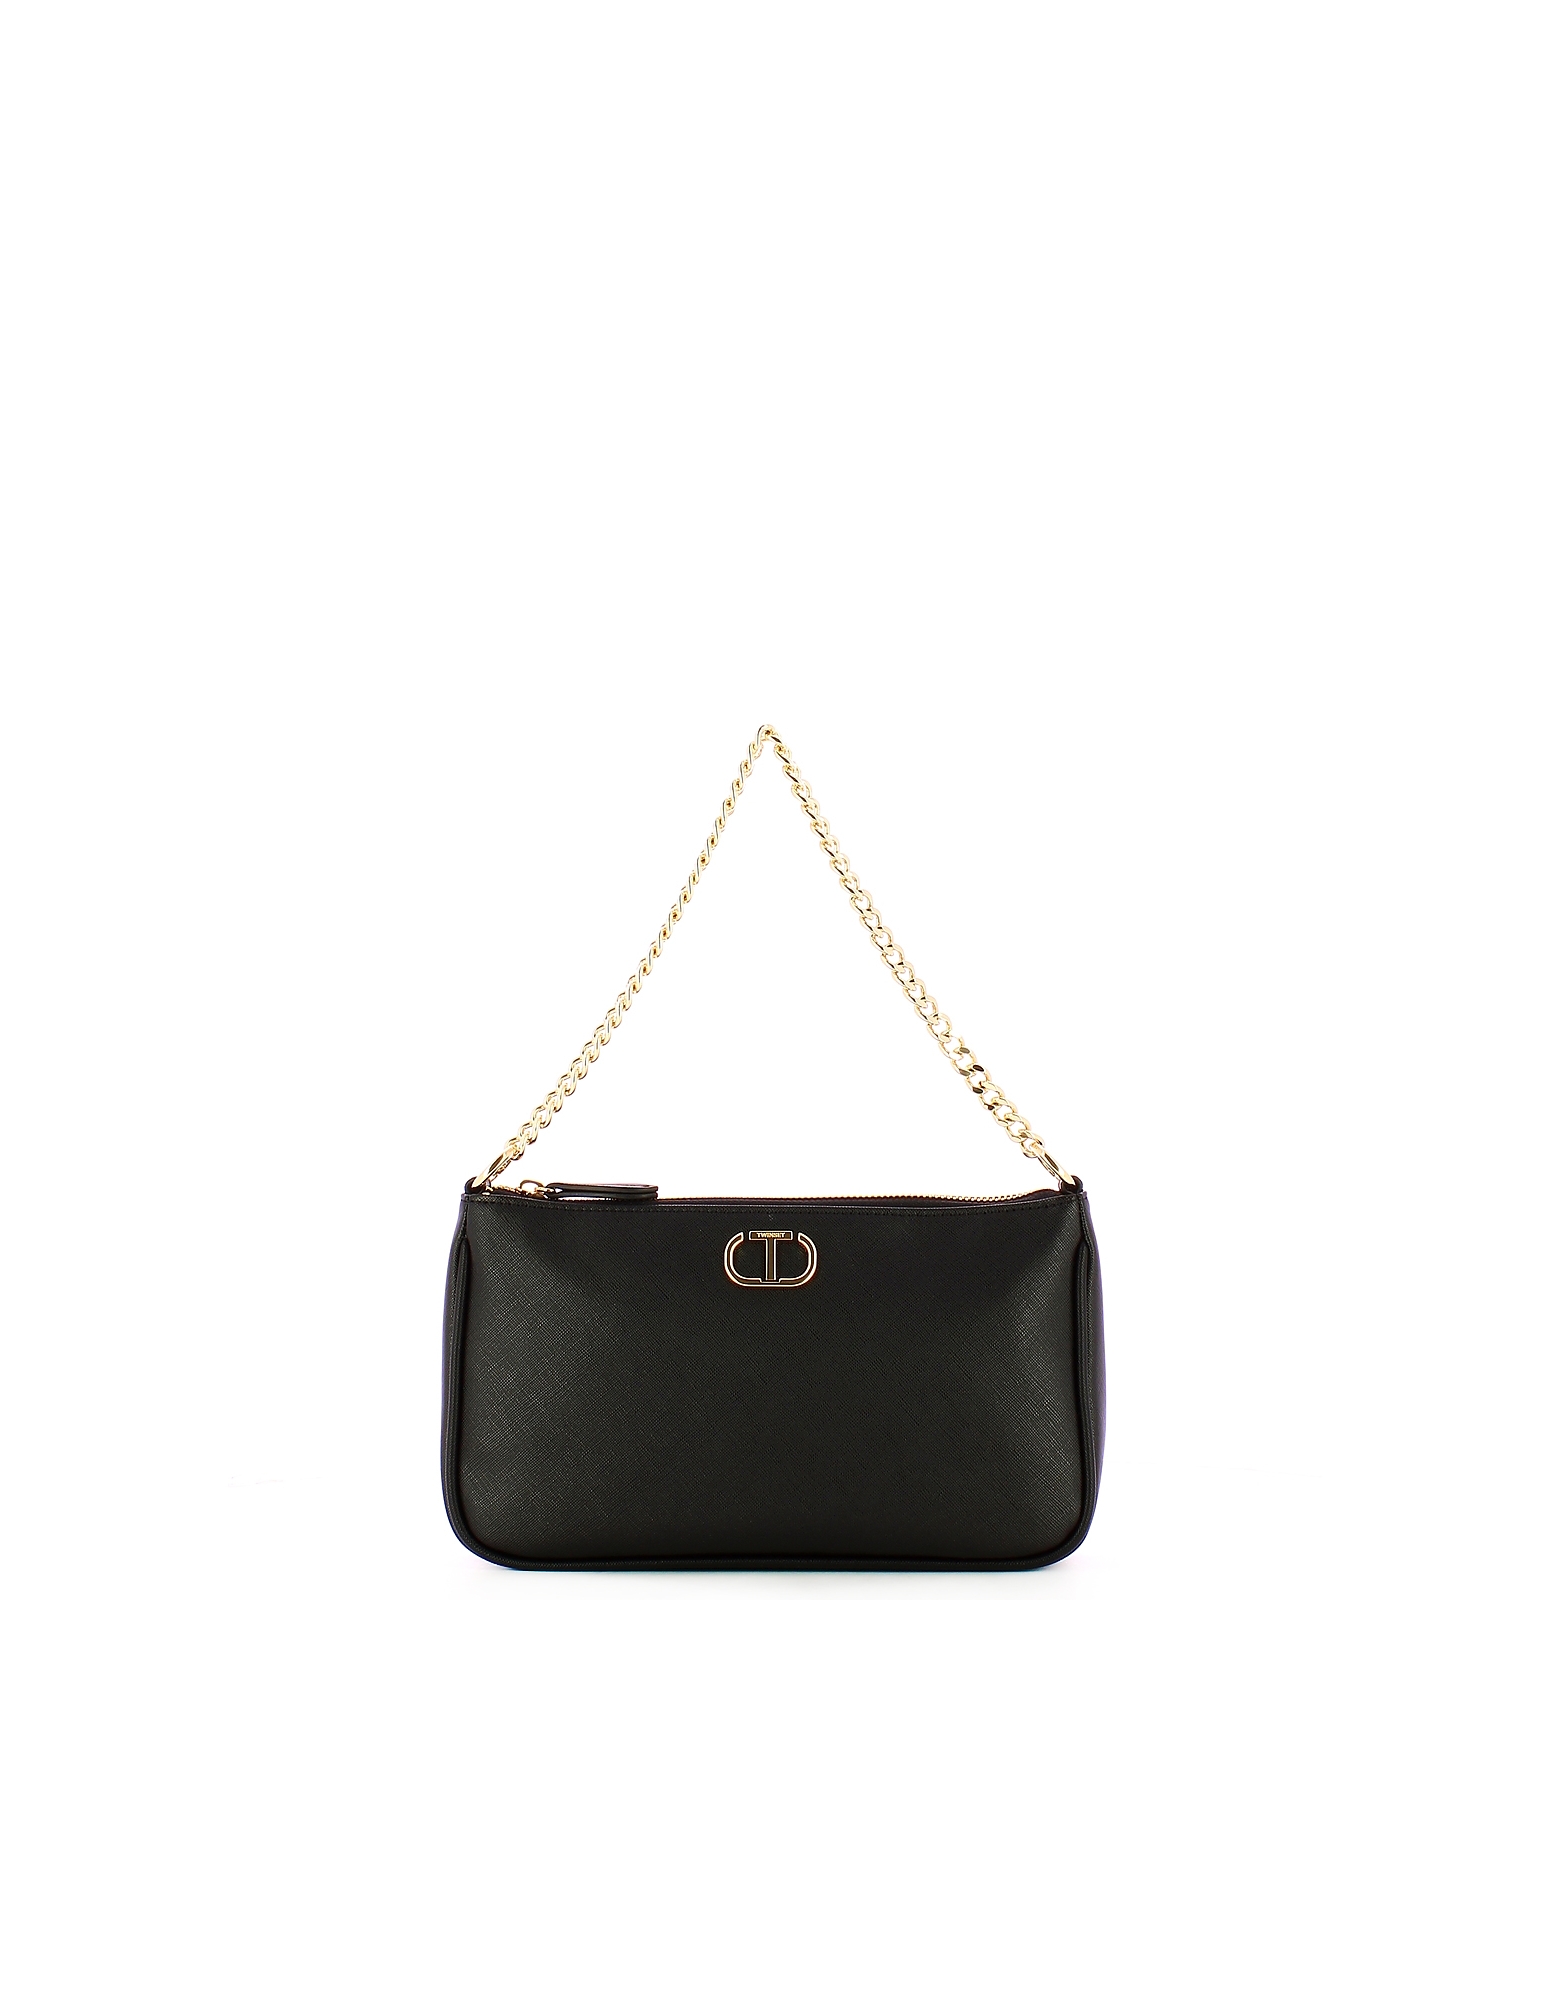 Twinset Designer Handbags Women's Black Bag